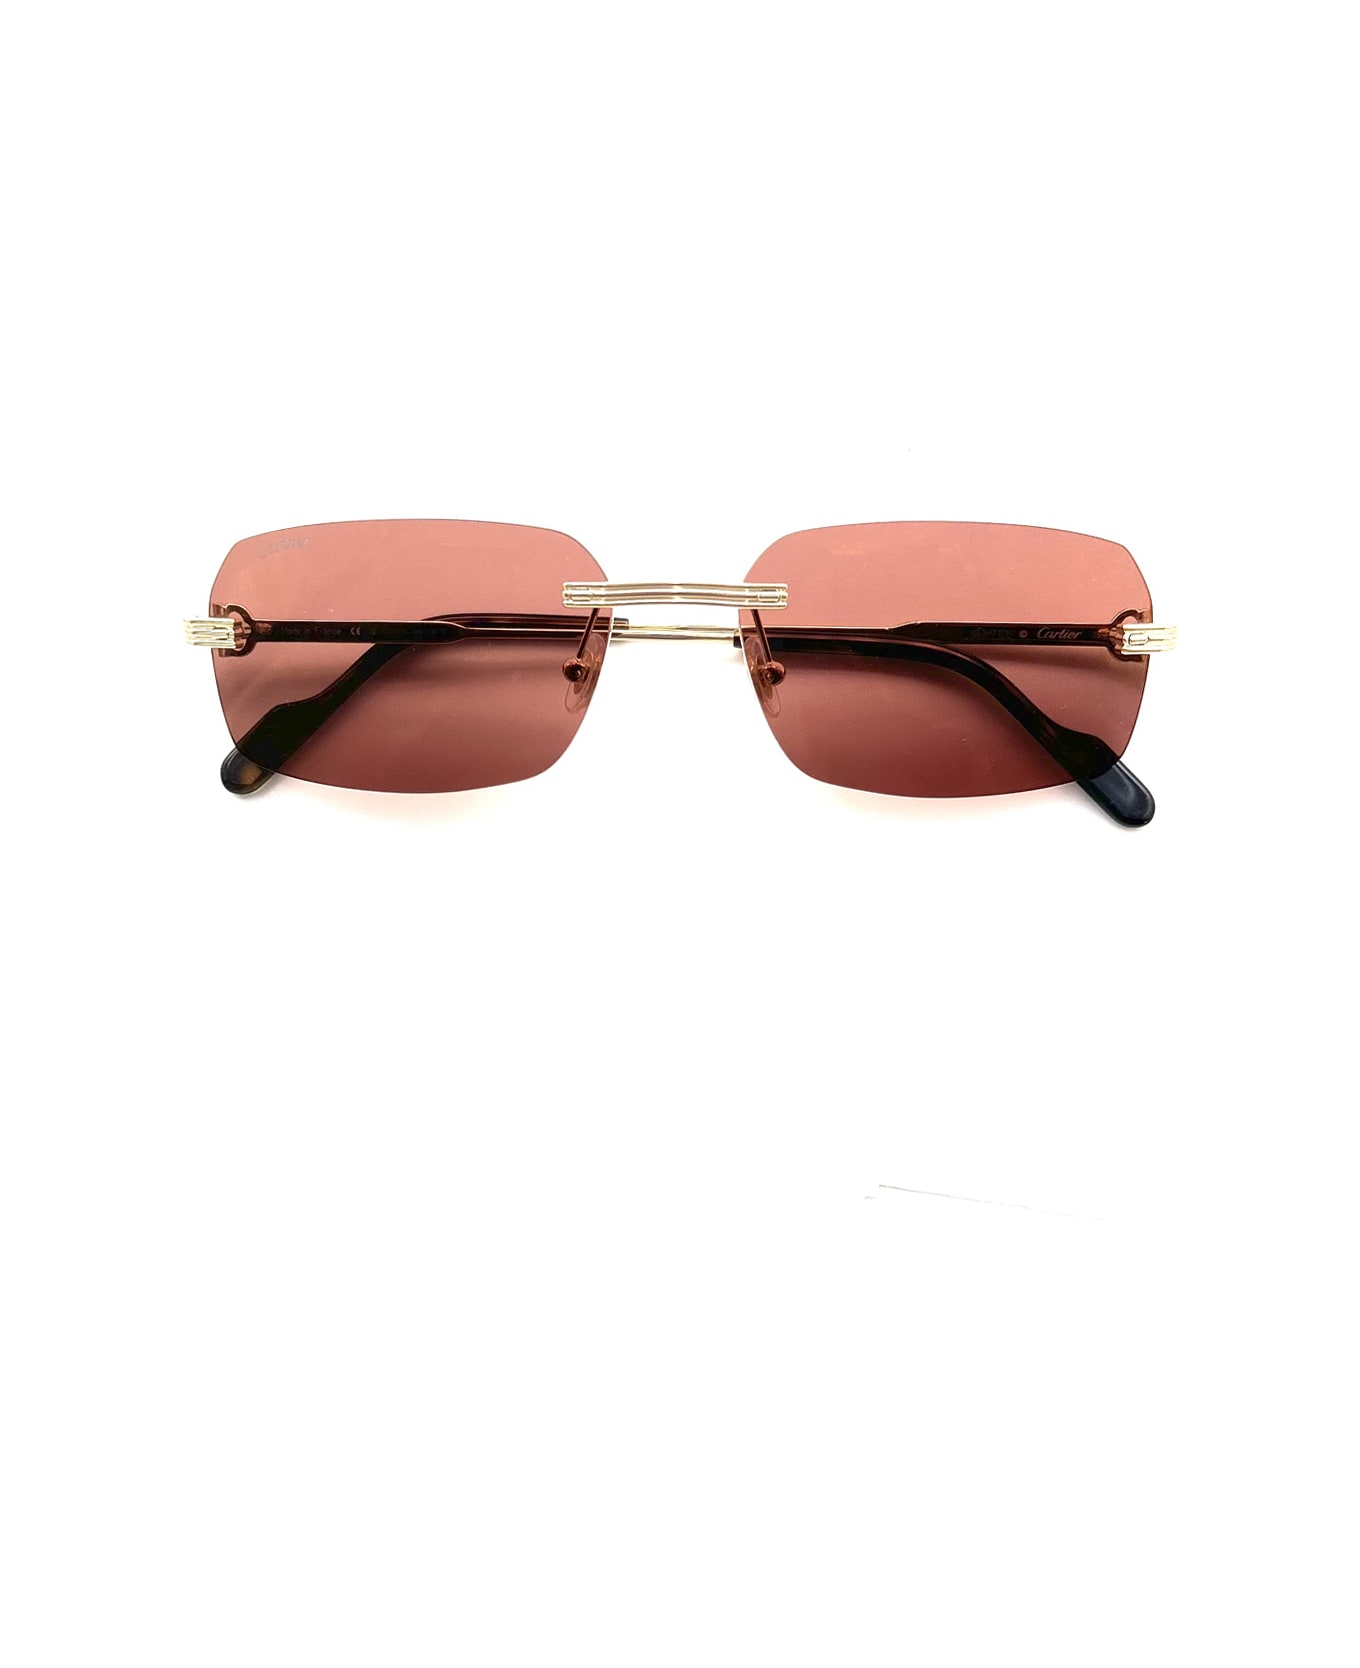 Cartier Eyewear Ct0271s 004 Sunglasses - Oro サングラス